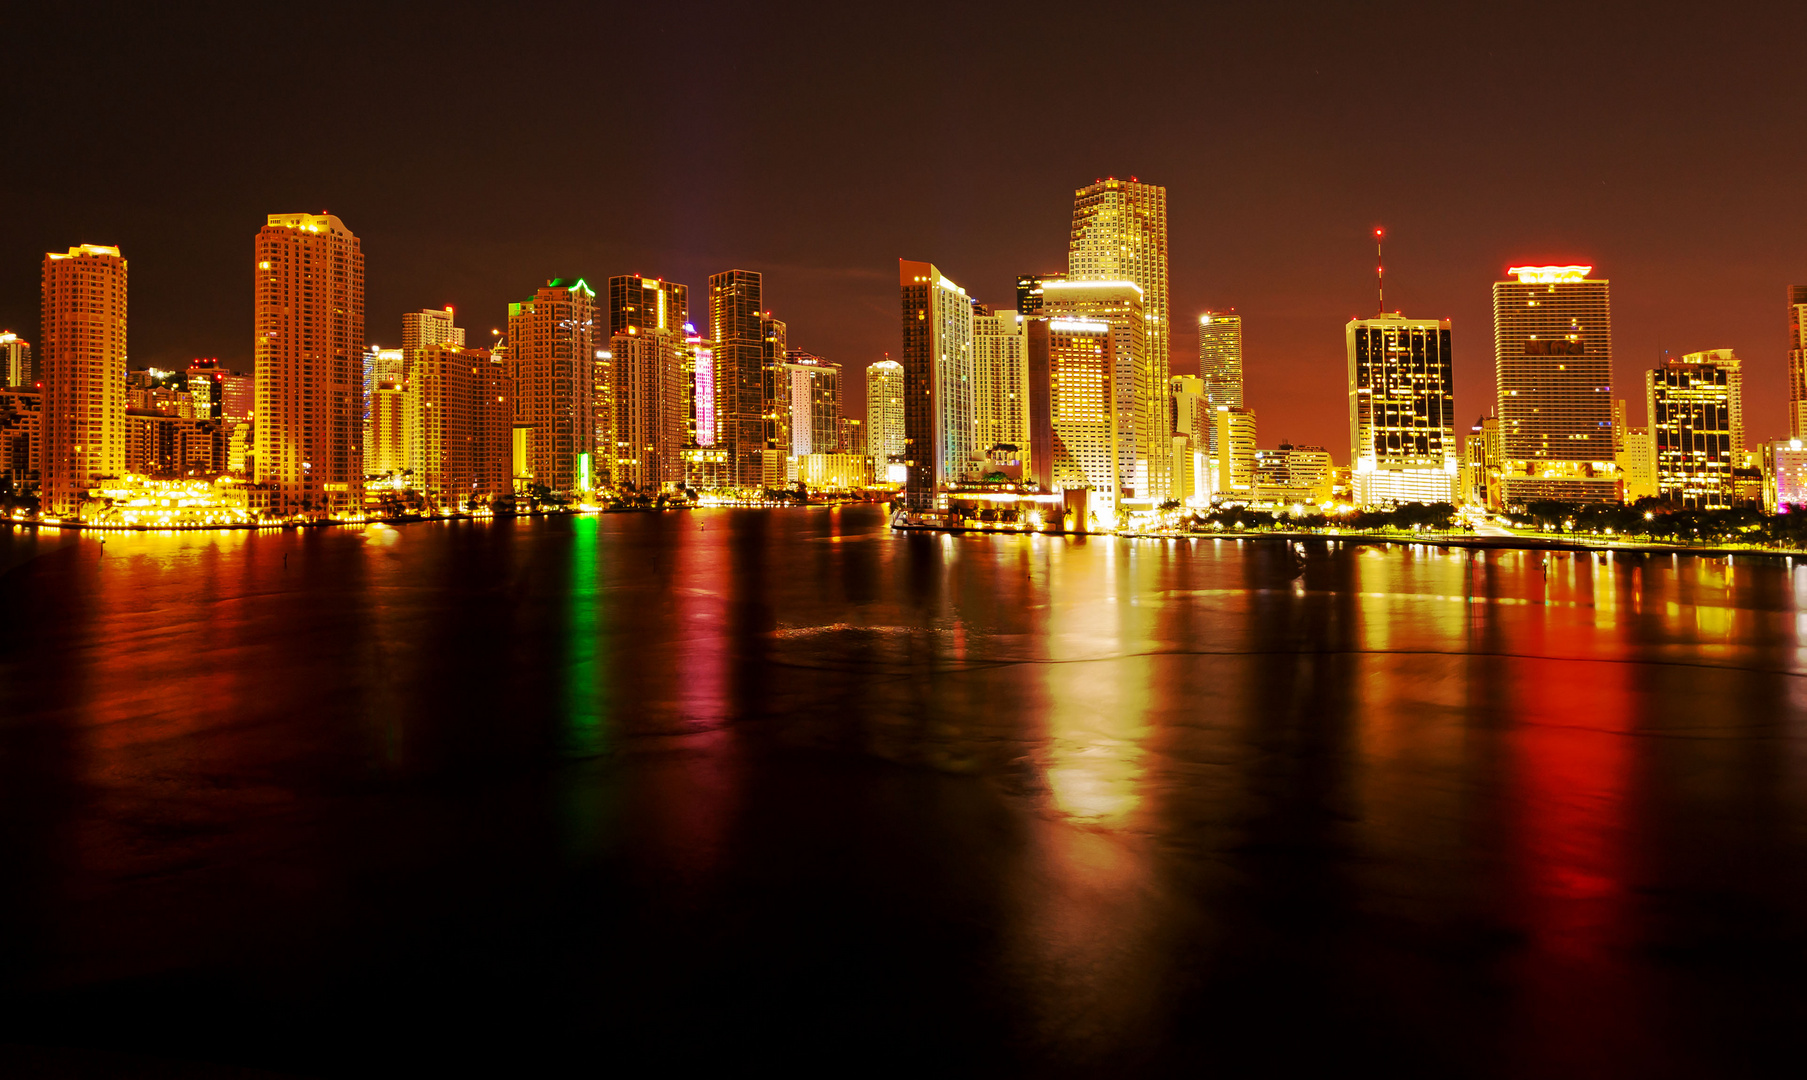 Miami at Night!